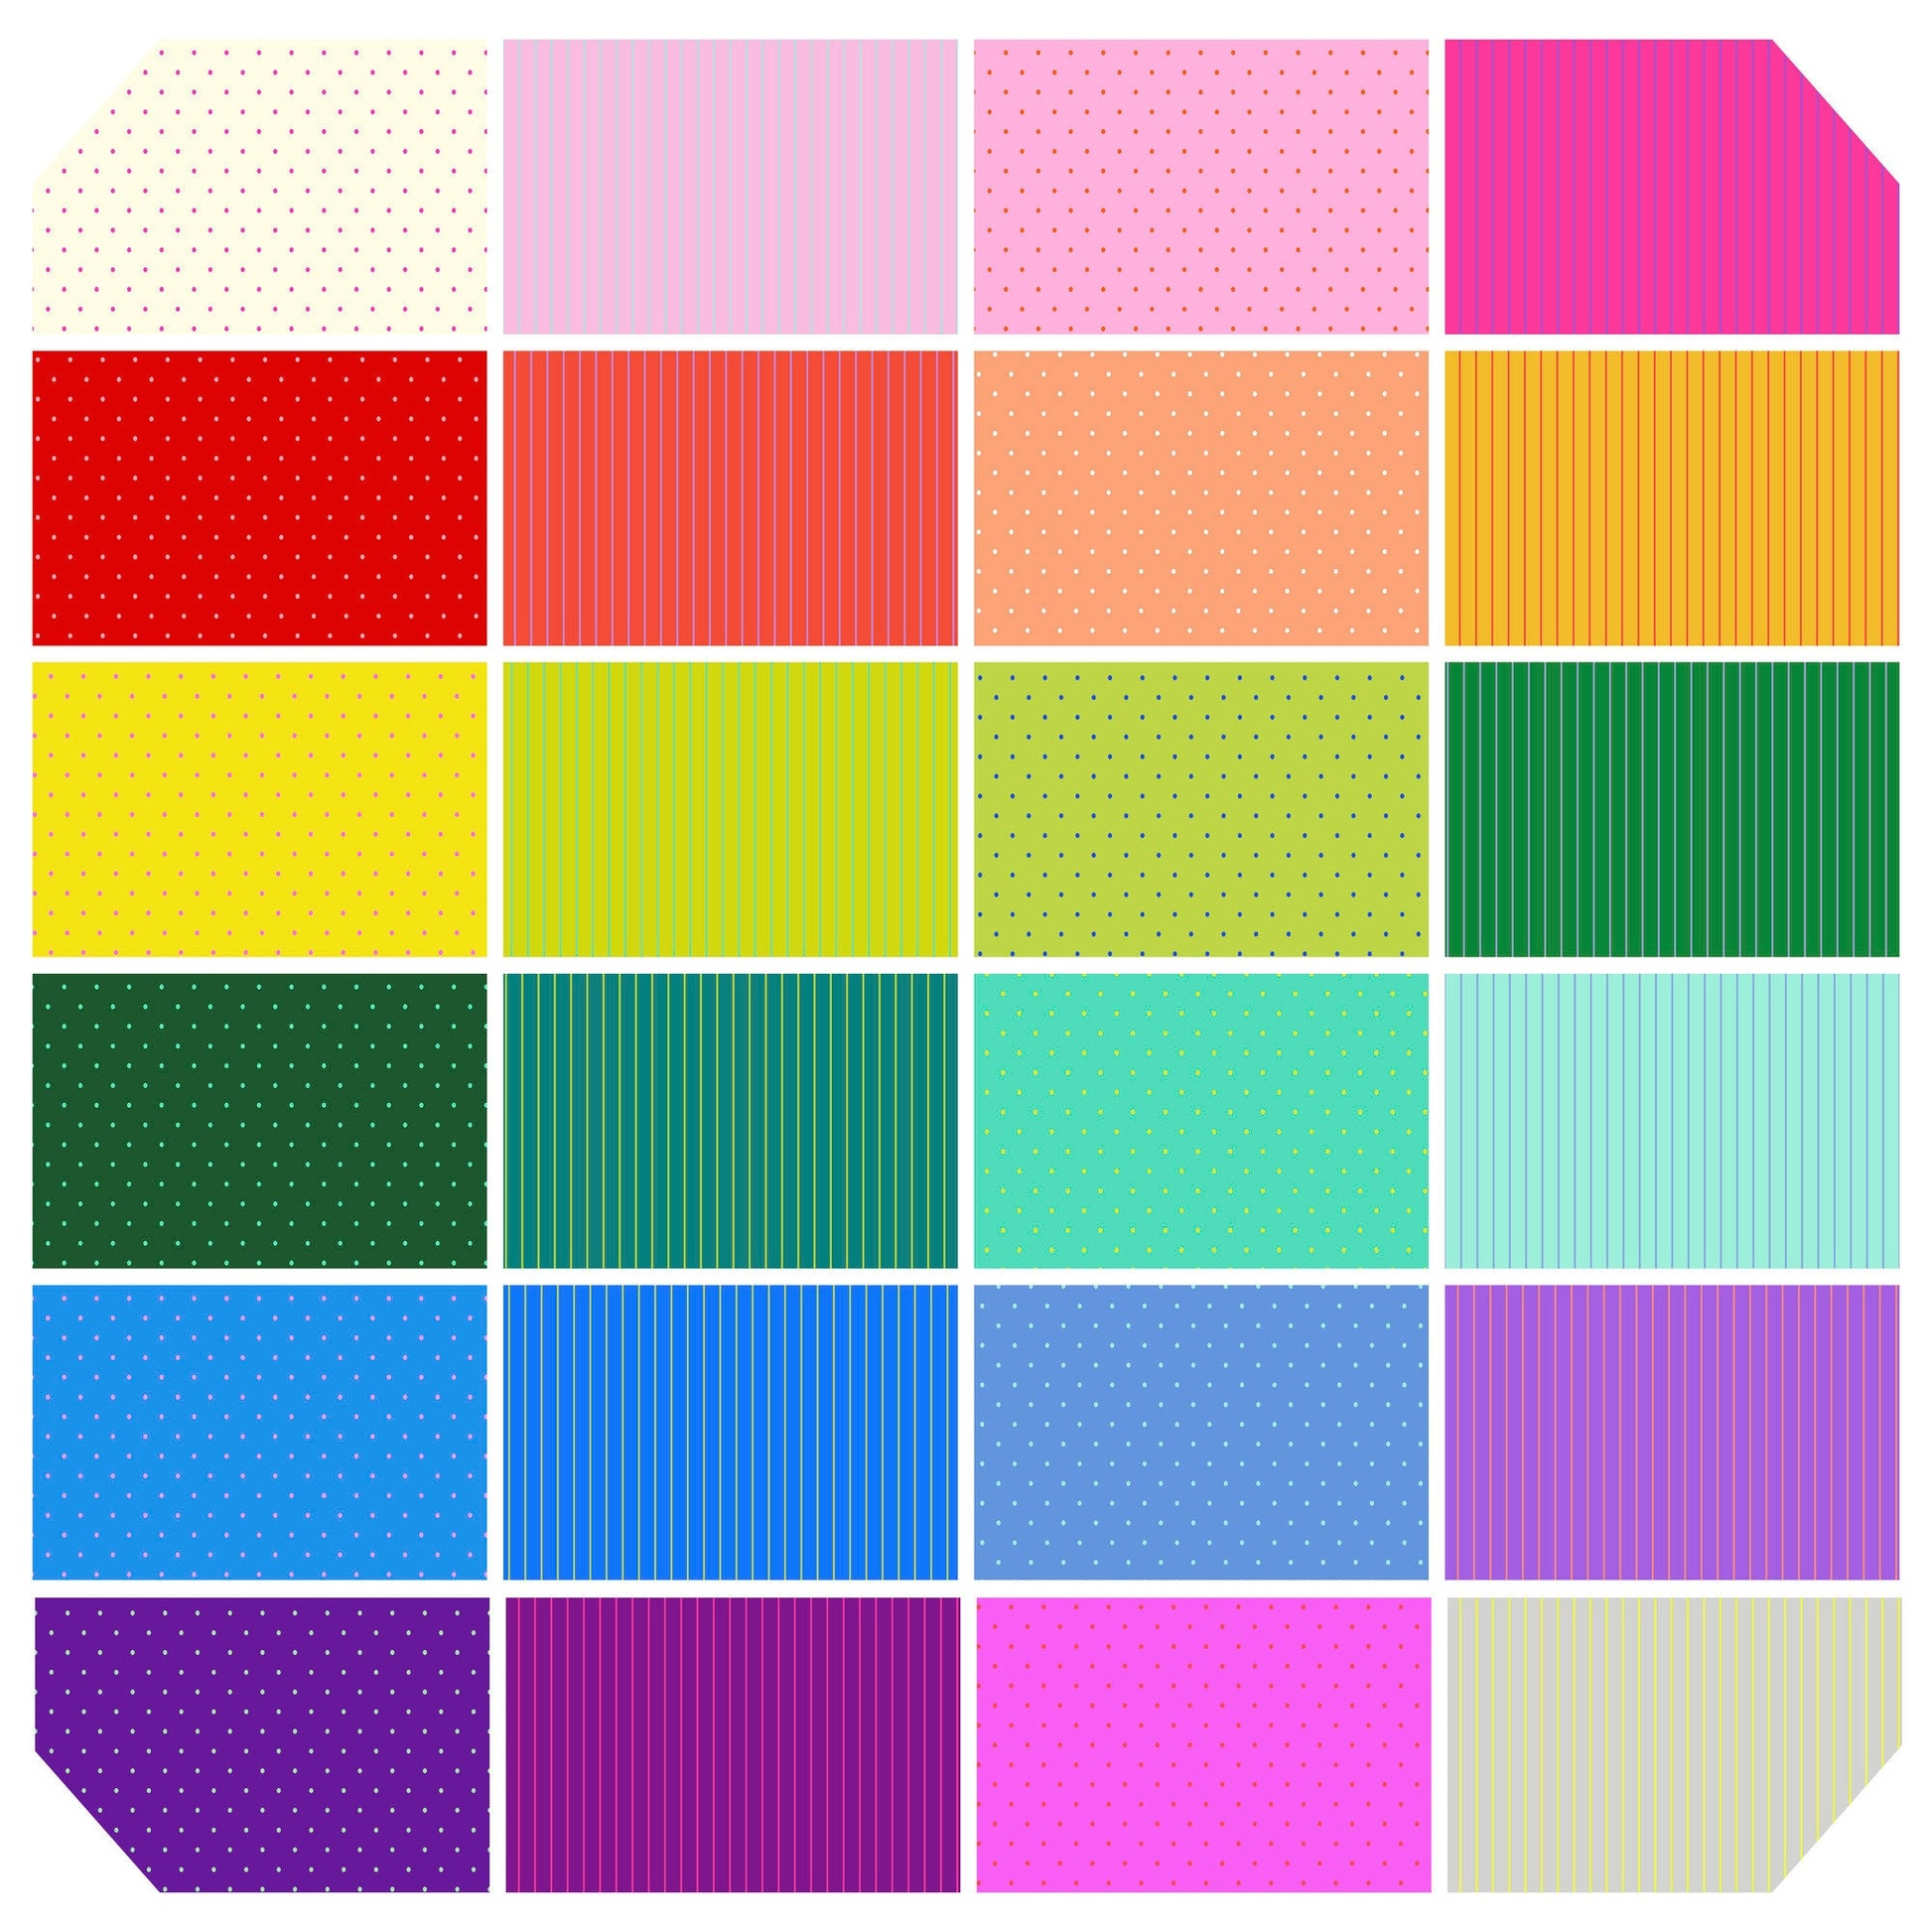 True Colors Tiny 42 Pcs Designer Roll Tula Pink FreeSpirit Fabrics 100% Quilters Cotton Tumbling Cosmos Fabric Fetish